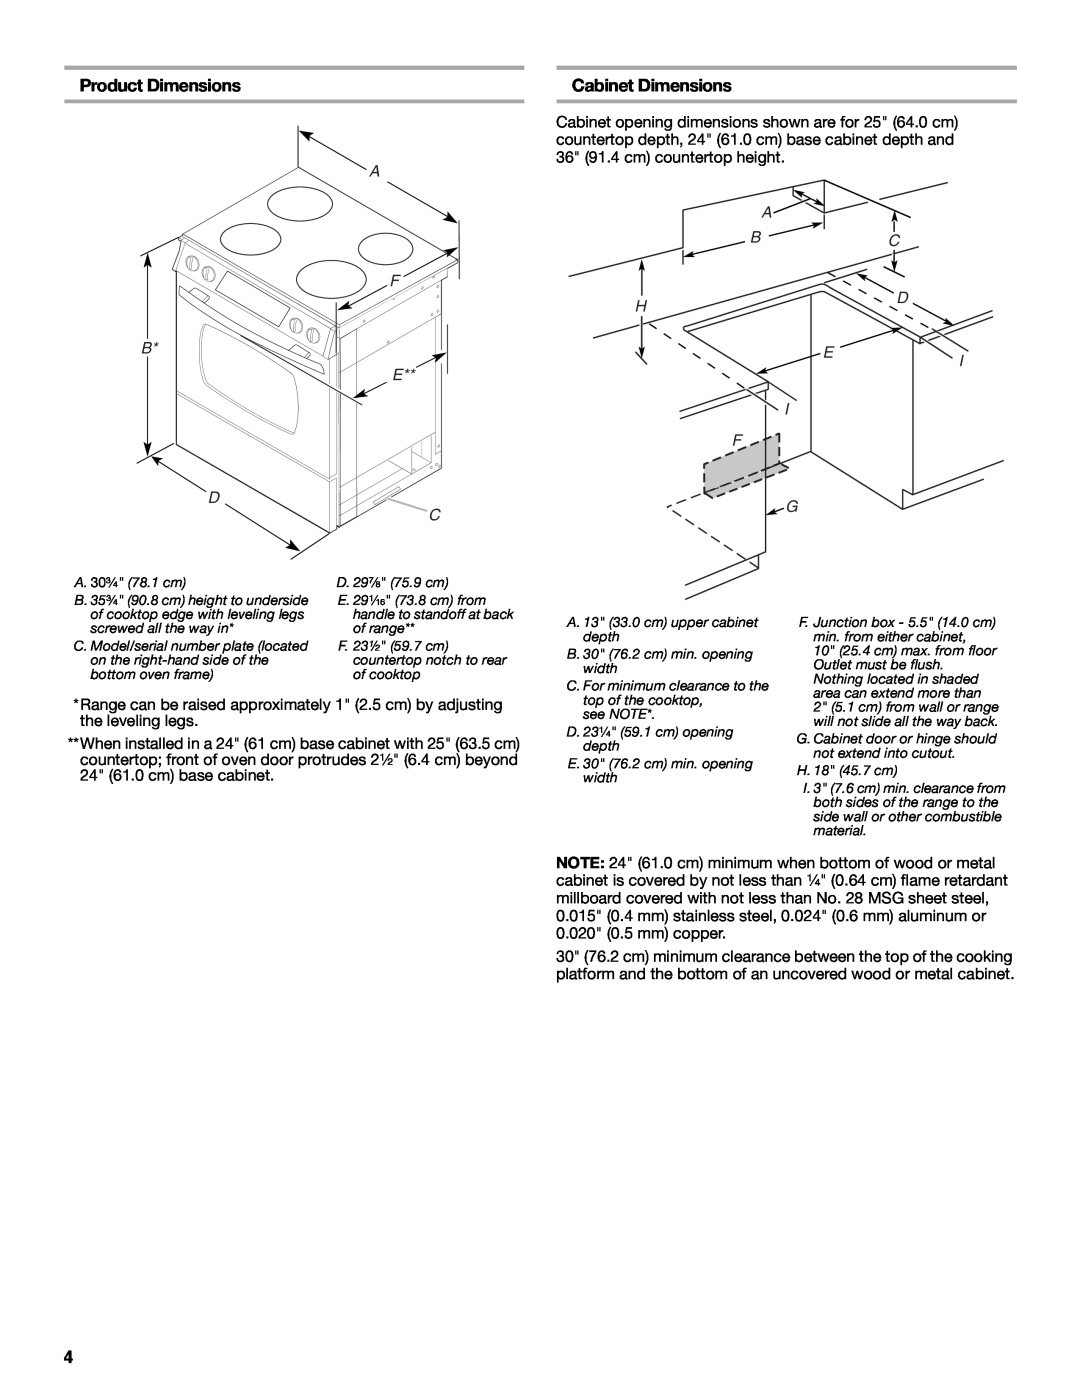 Jenn-Air W10253462A installation instructions Product Dimensions, Cabinet Dimensions, A F E C, A Bc, Ei I F G 